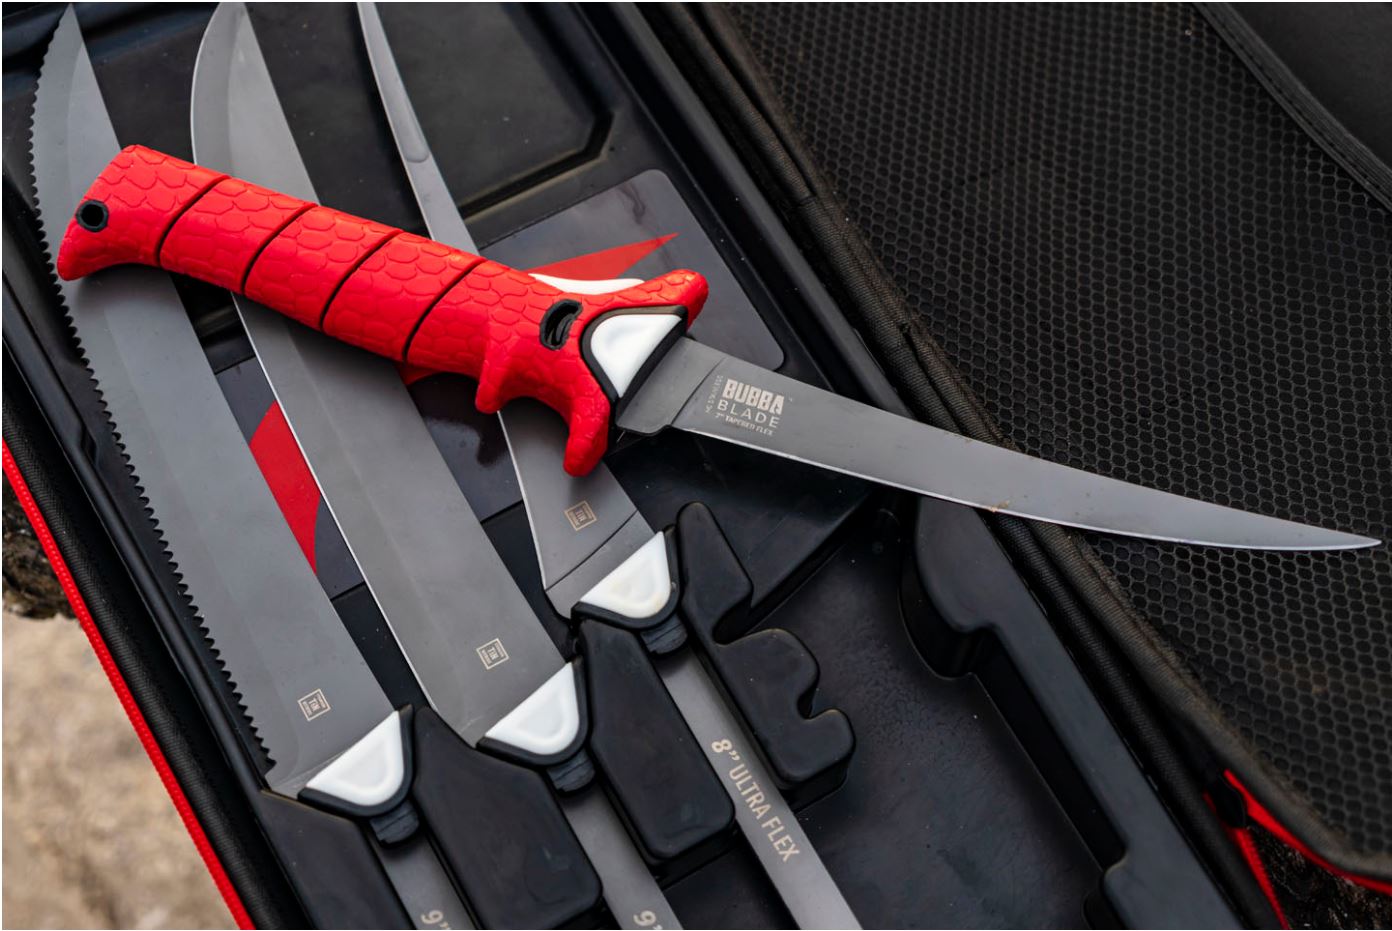 Battle Samurai Stainless Steel | ABS Handle 4.5″ Folding Knife